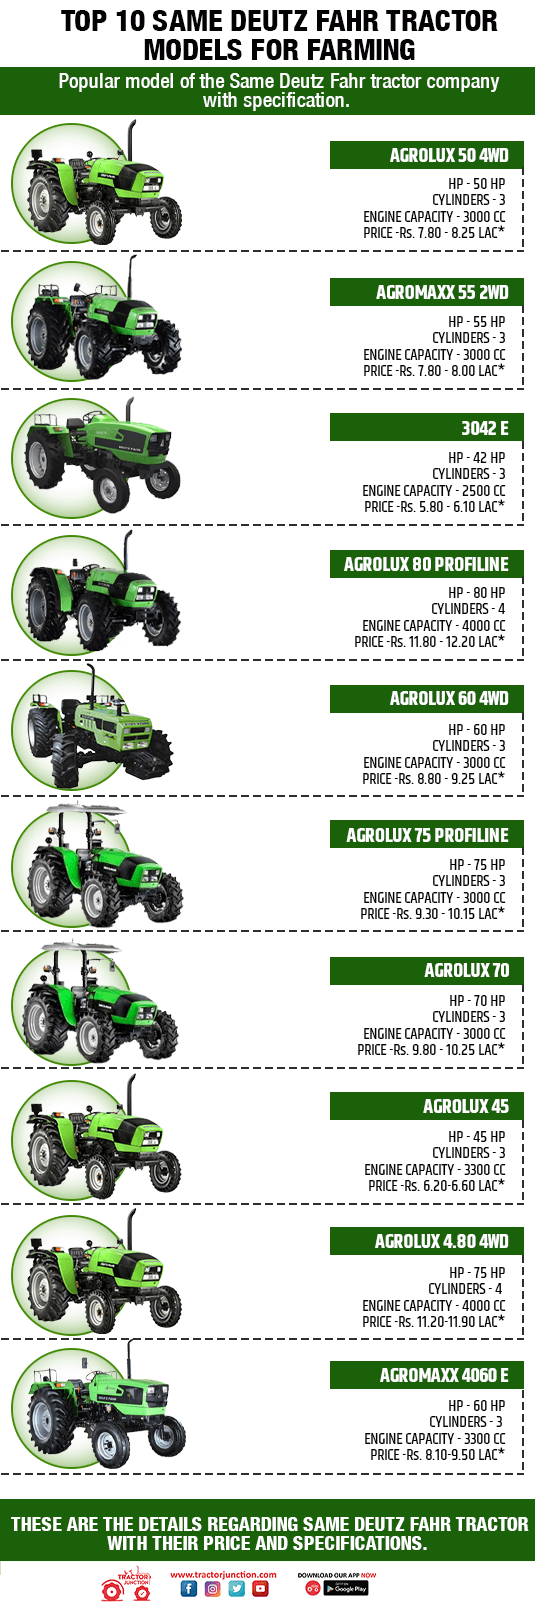 Top 10 Same Deutz Fahr Tractor Models for Farming - Infographic